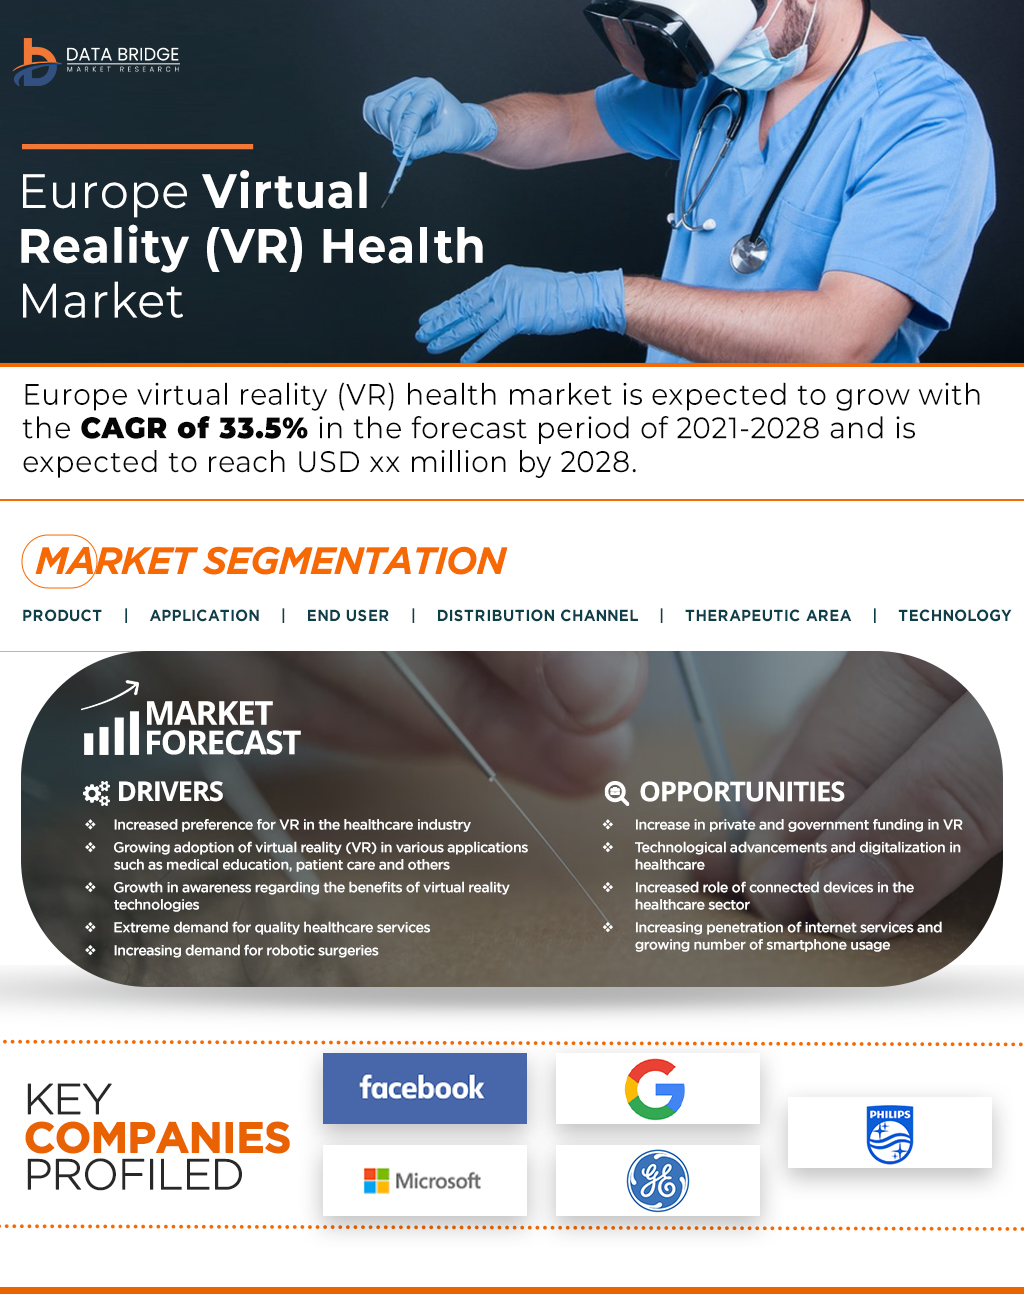 Europe Virtual Reality (VR) Health Market